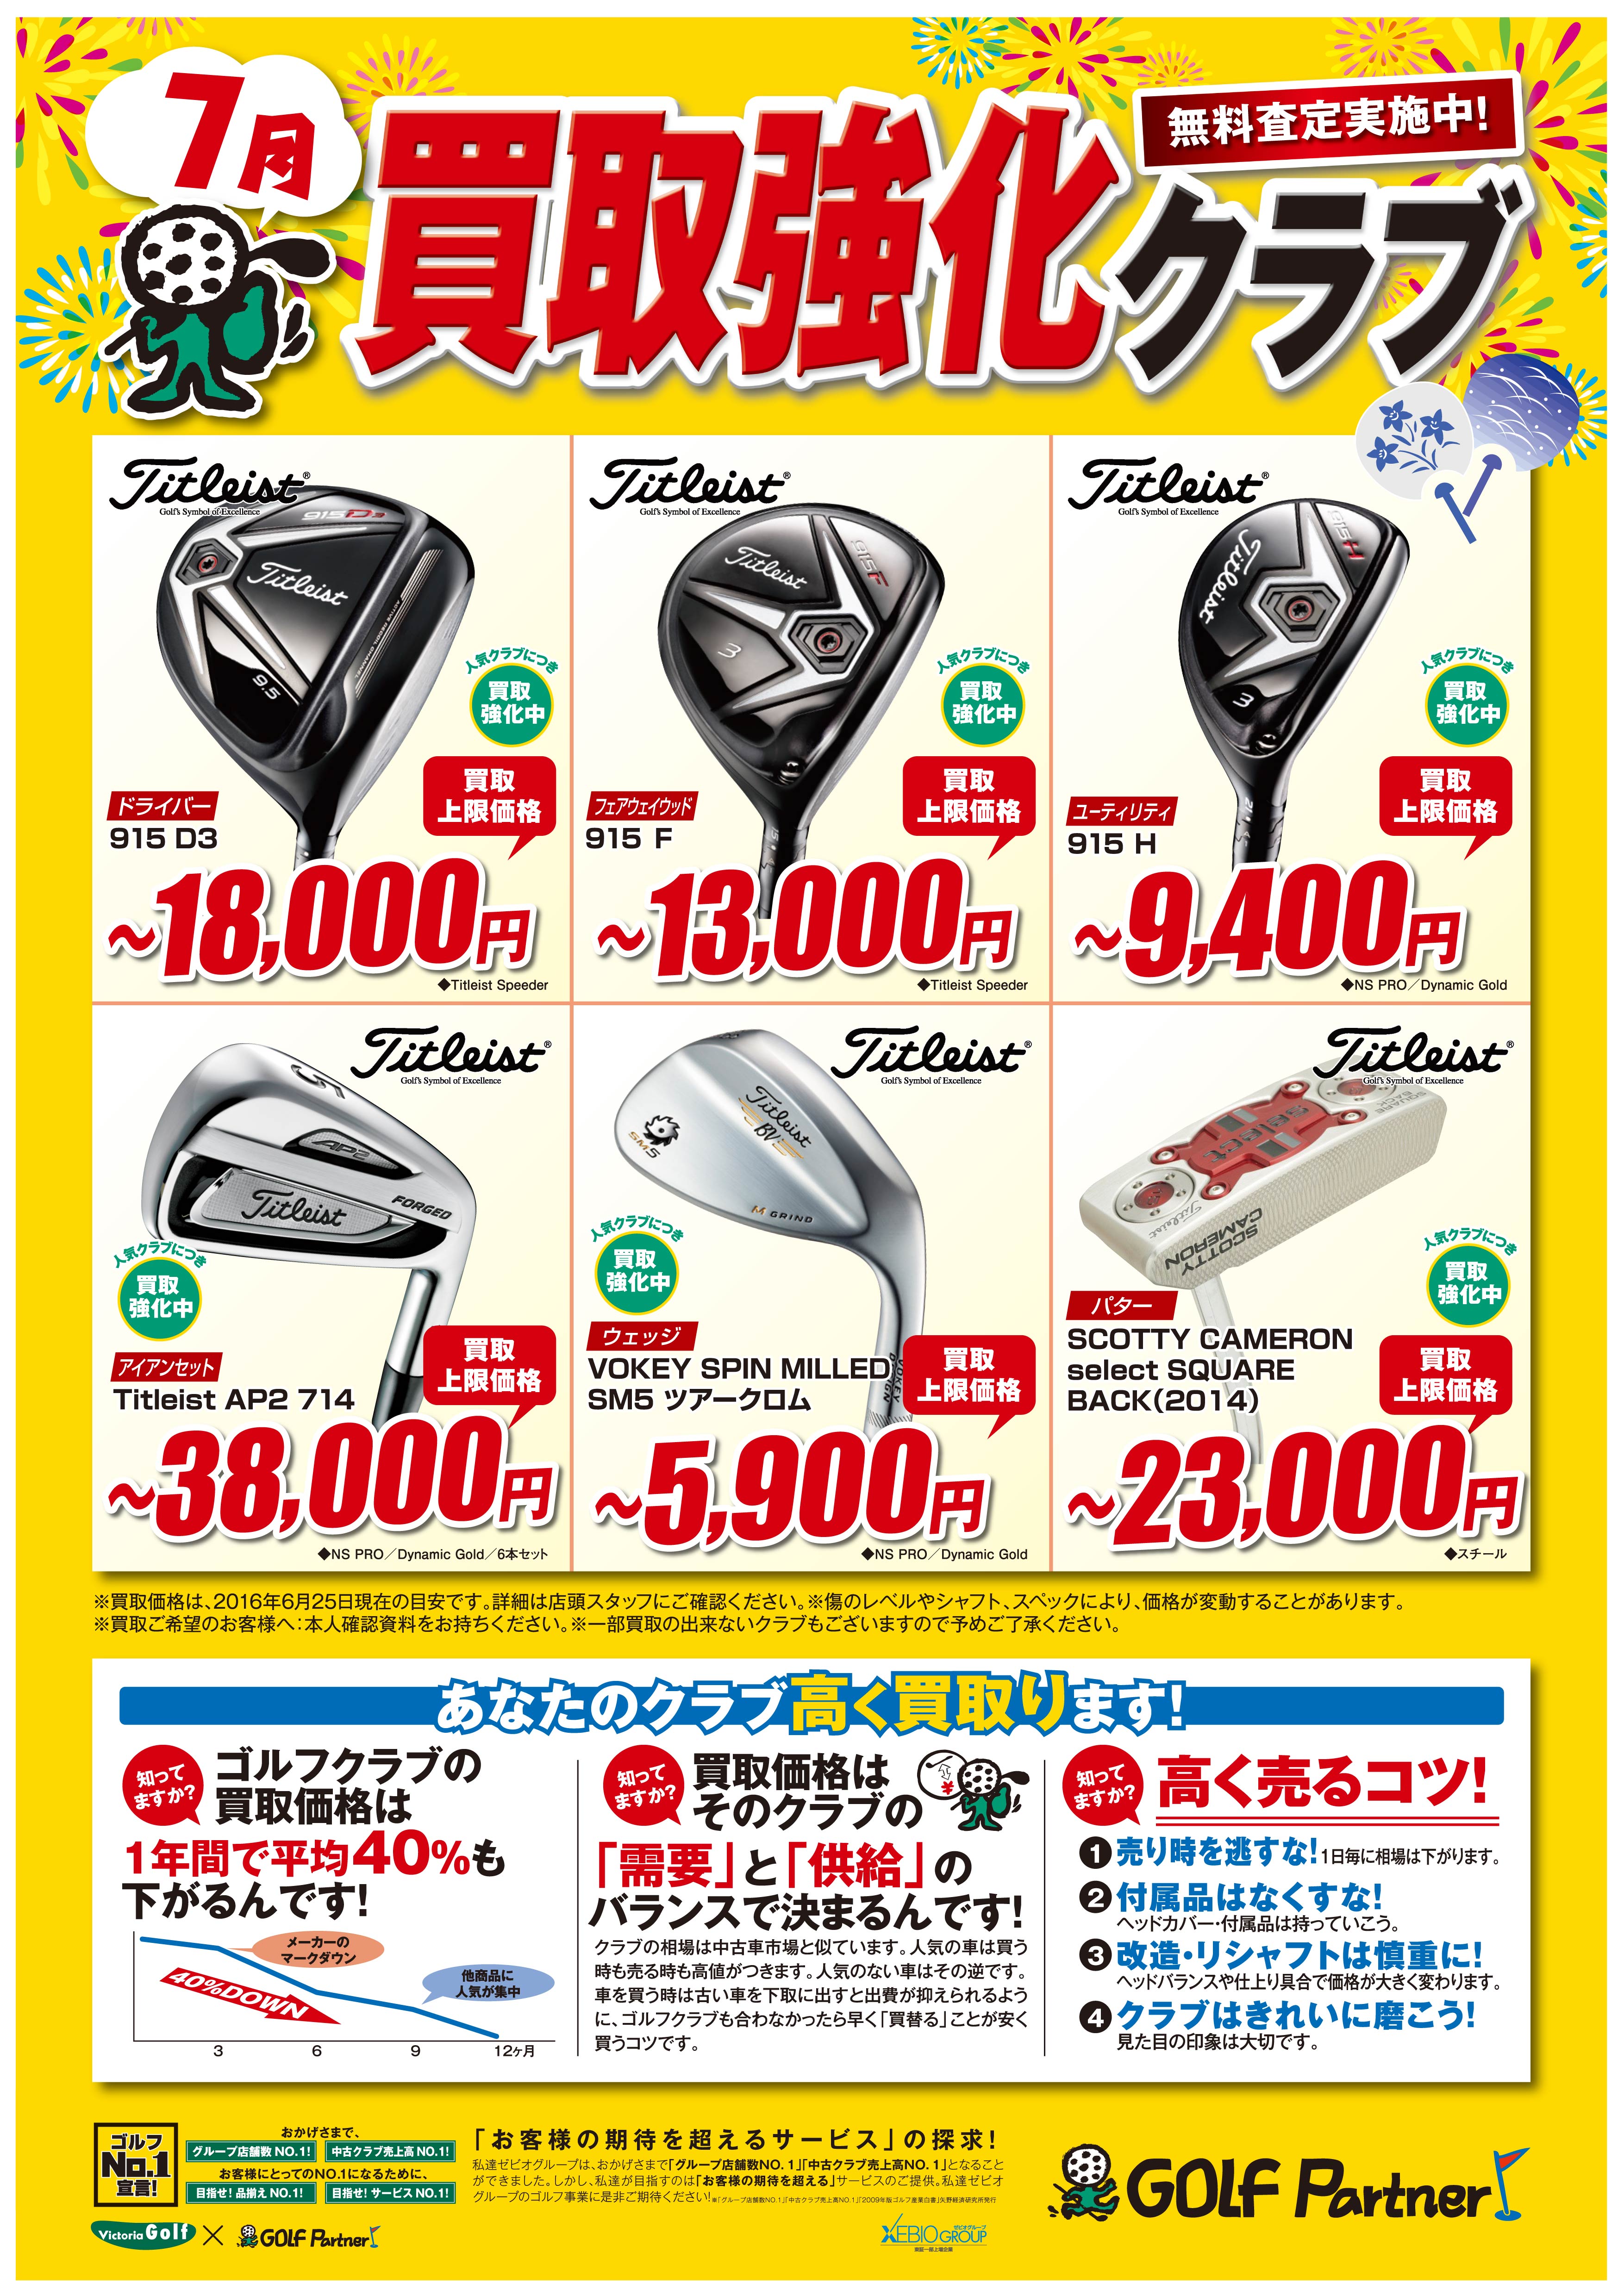 http://www.golfpartner.co.jp/536/1606_7kaitori_A3_GP.jpg